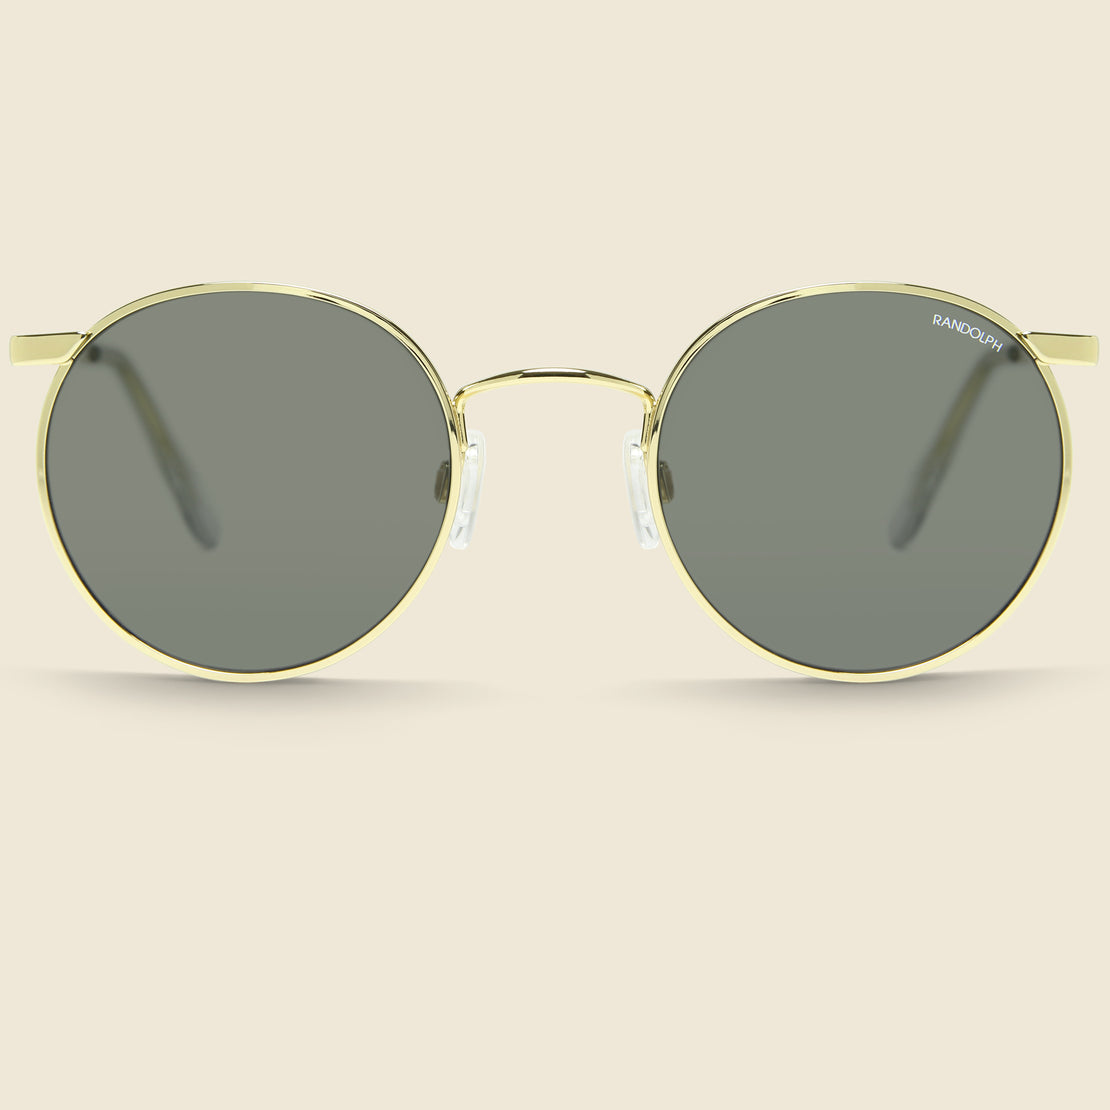 Randolph Engineering P3 Sunglasses - Polarized American Gray/Gold